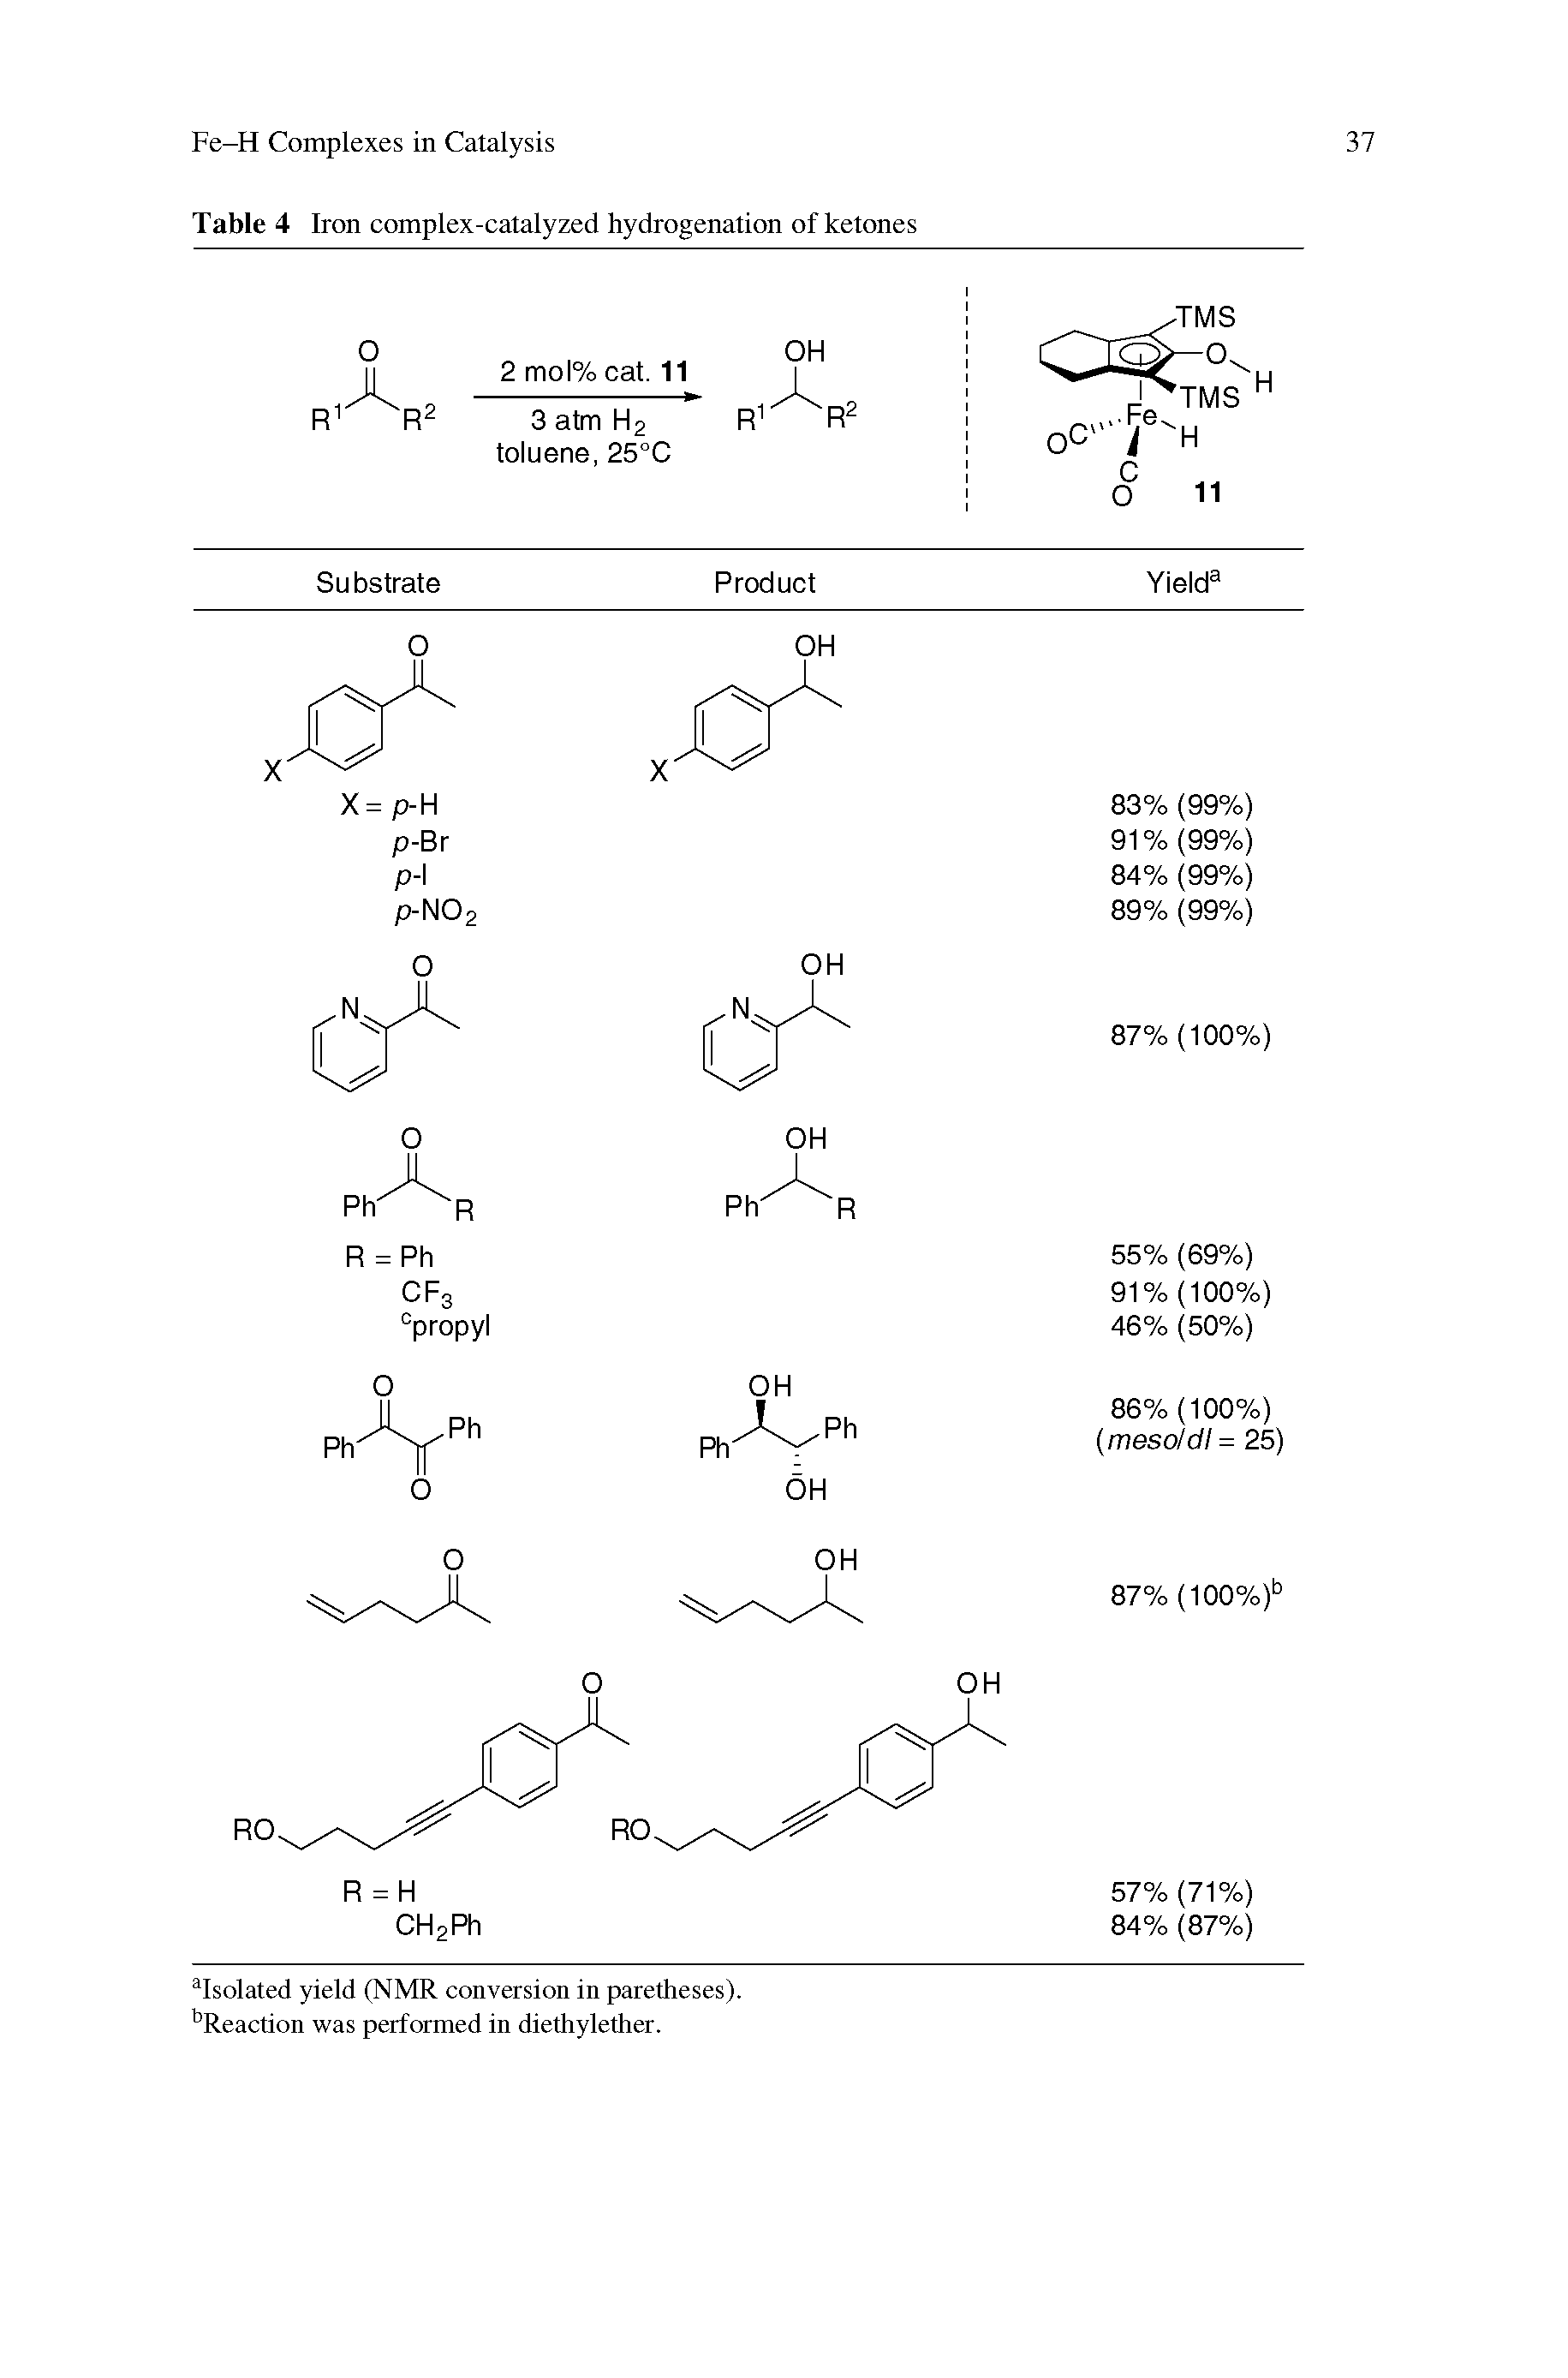 Table 4 Iron complex-catalyzed hydrogenation of ketones...